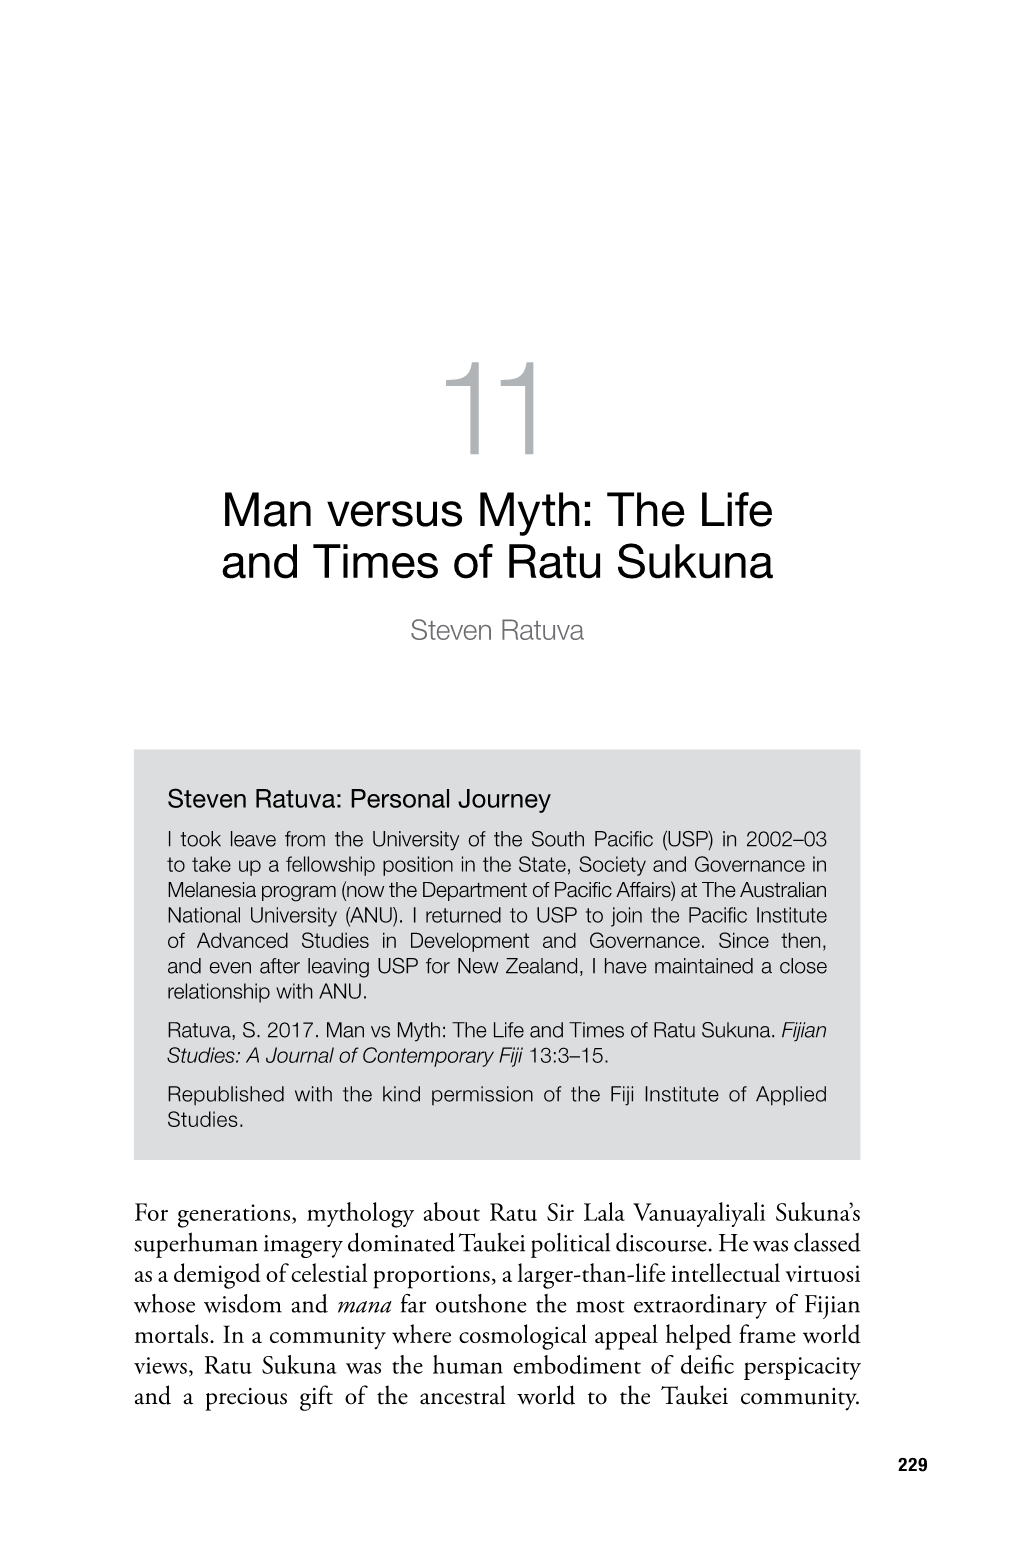 11. Man Versus Myth: the Life and Times of Ratu Sukuna